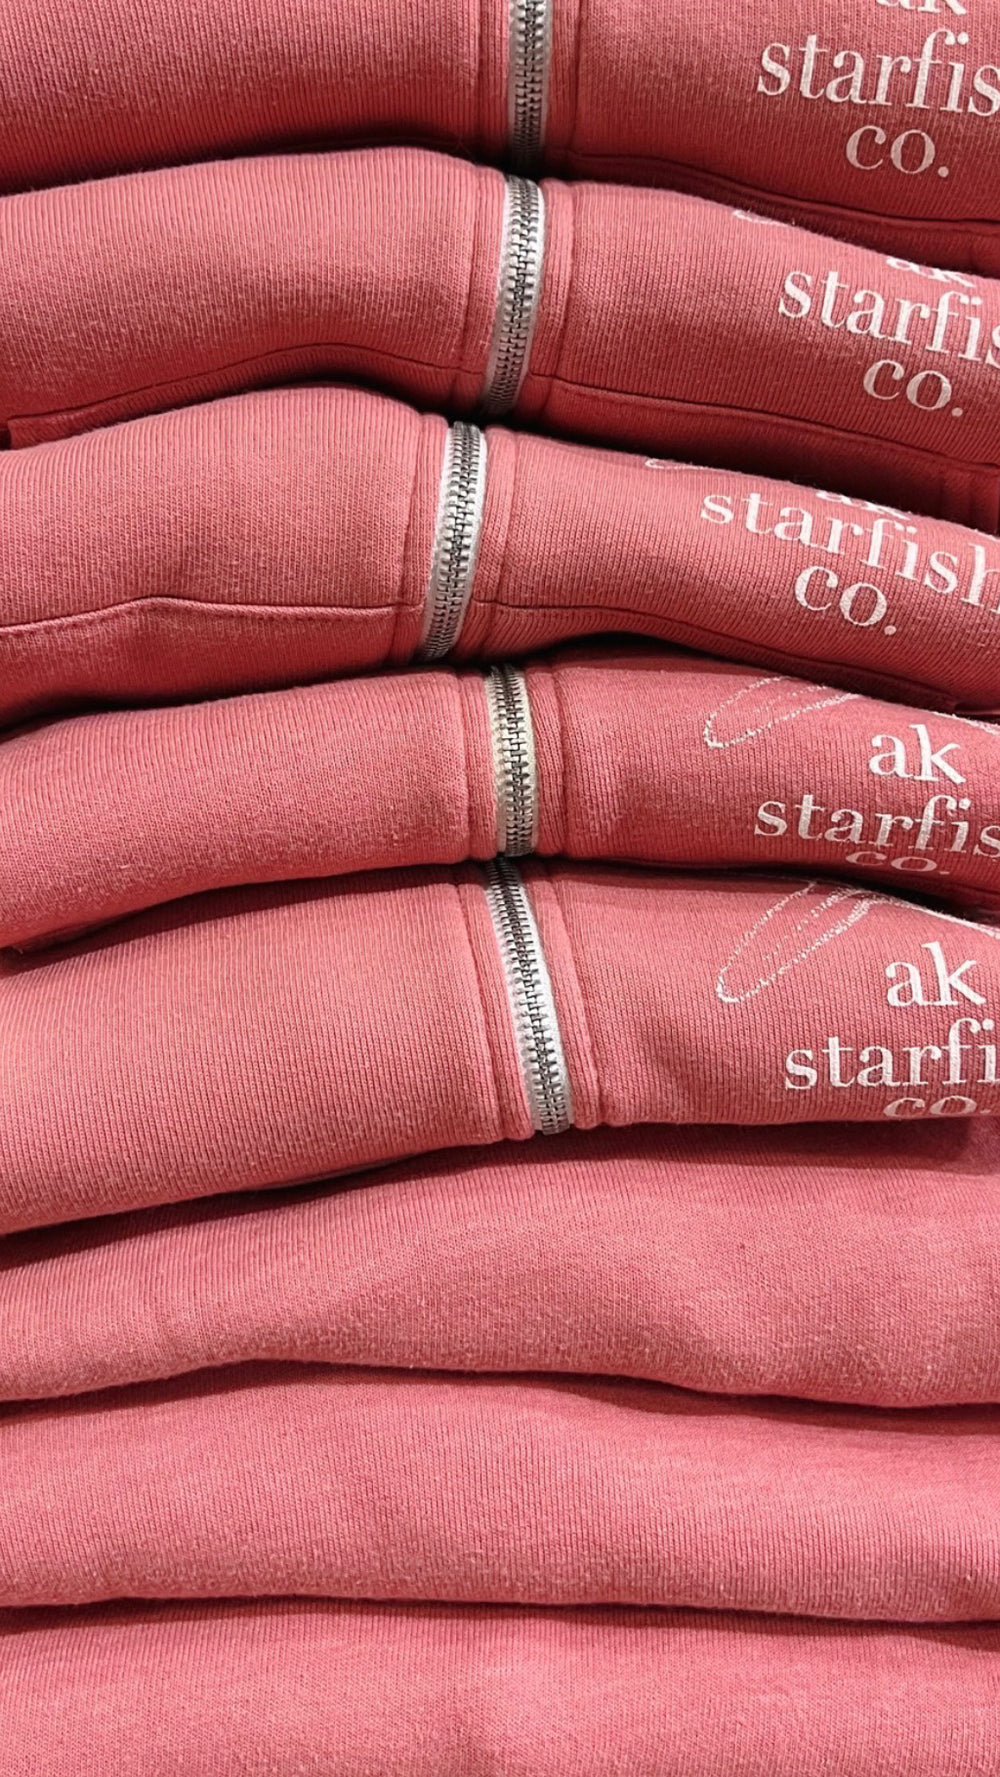 AK Starfish Co. Winter Pink Triblend Zipped Hoody $69.00